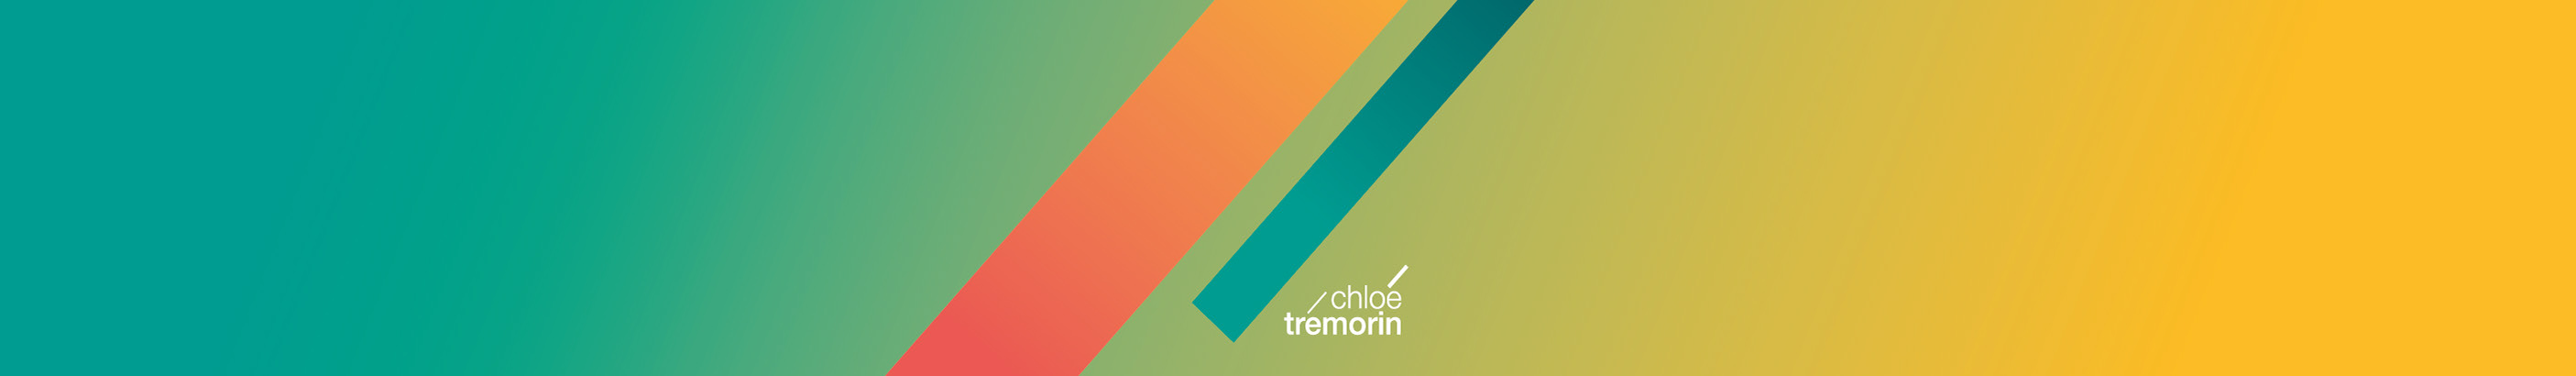 chloe tremorin's profile banner